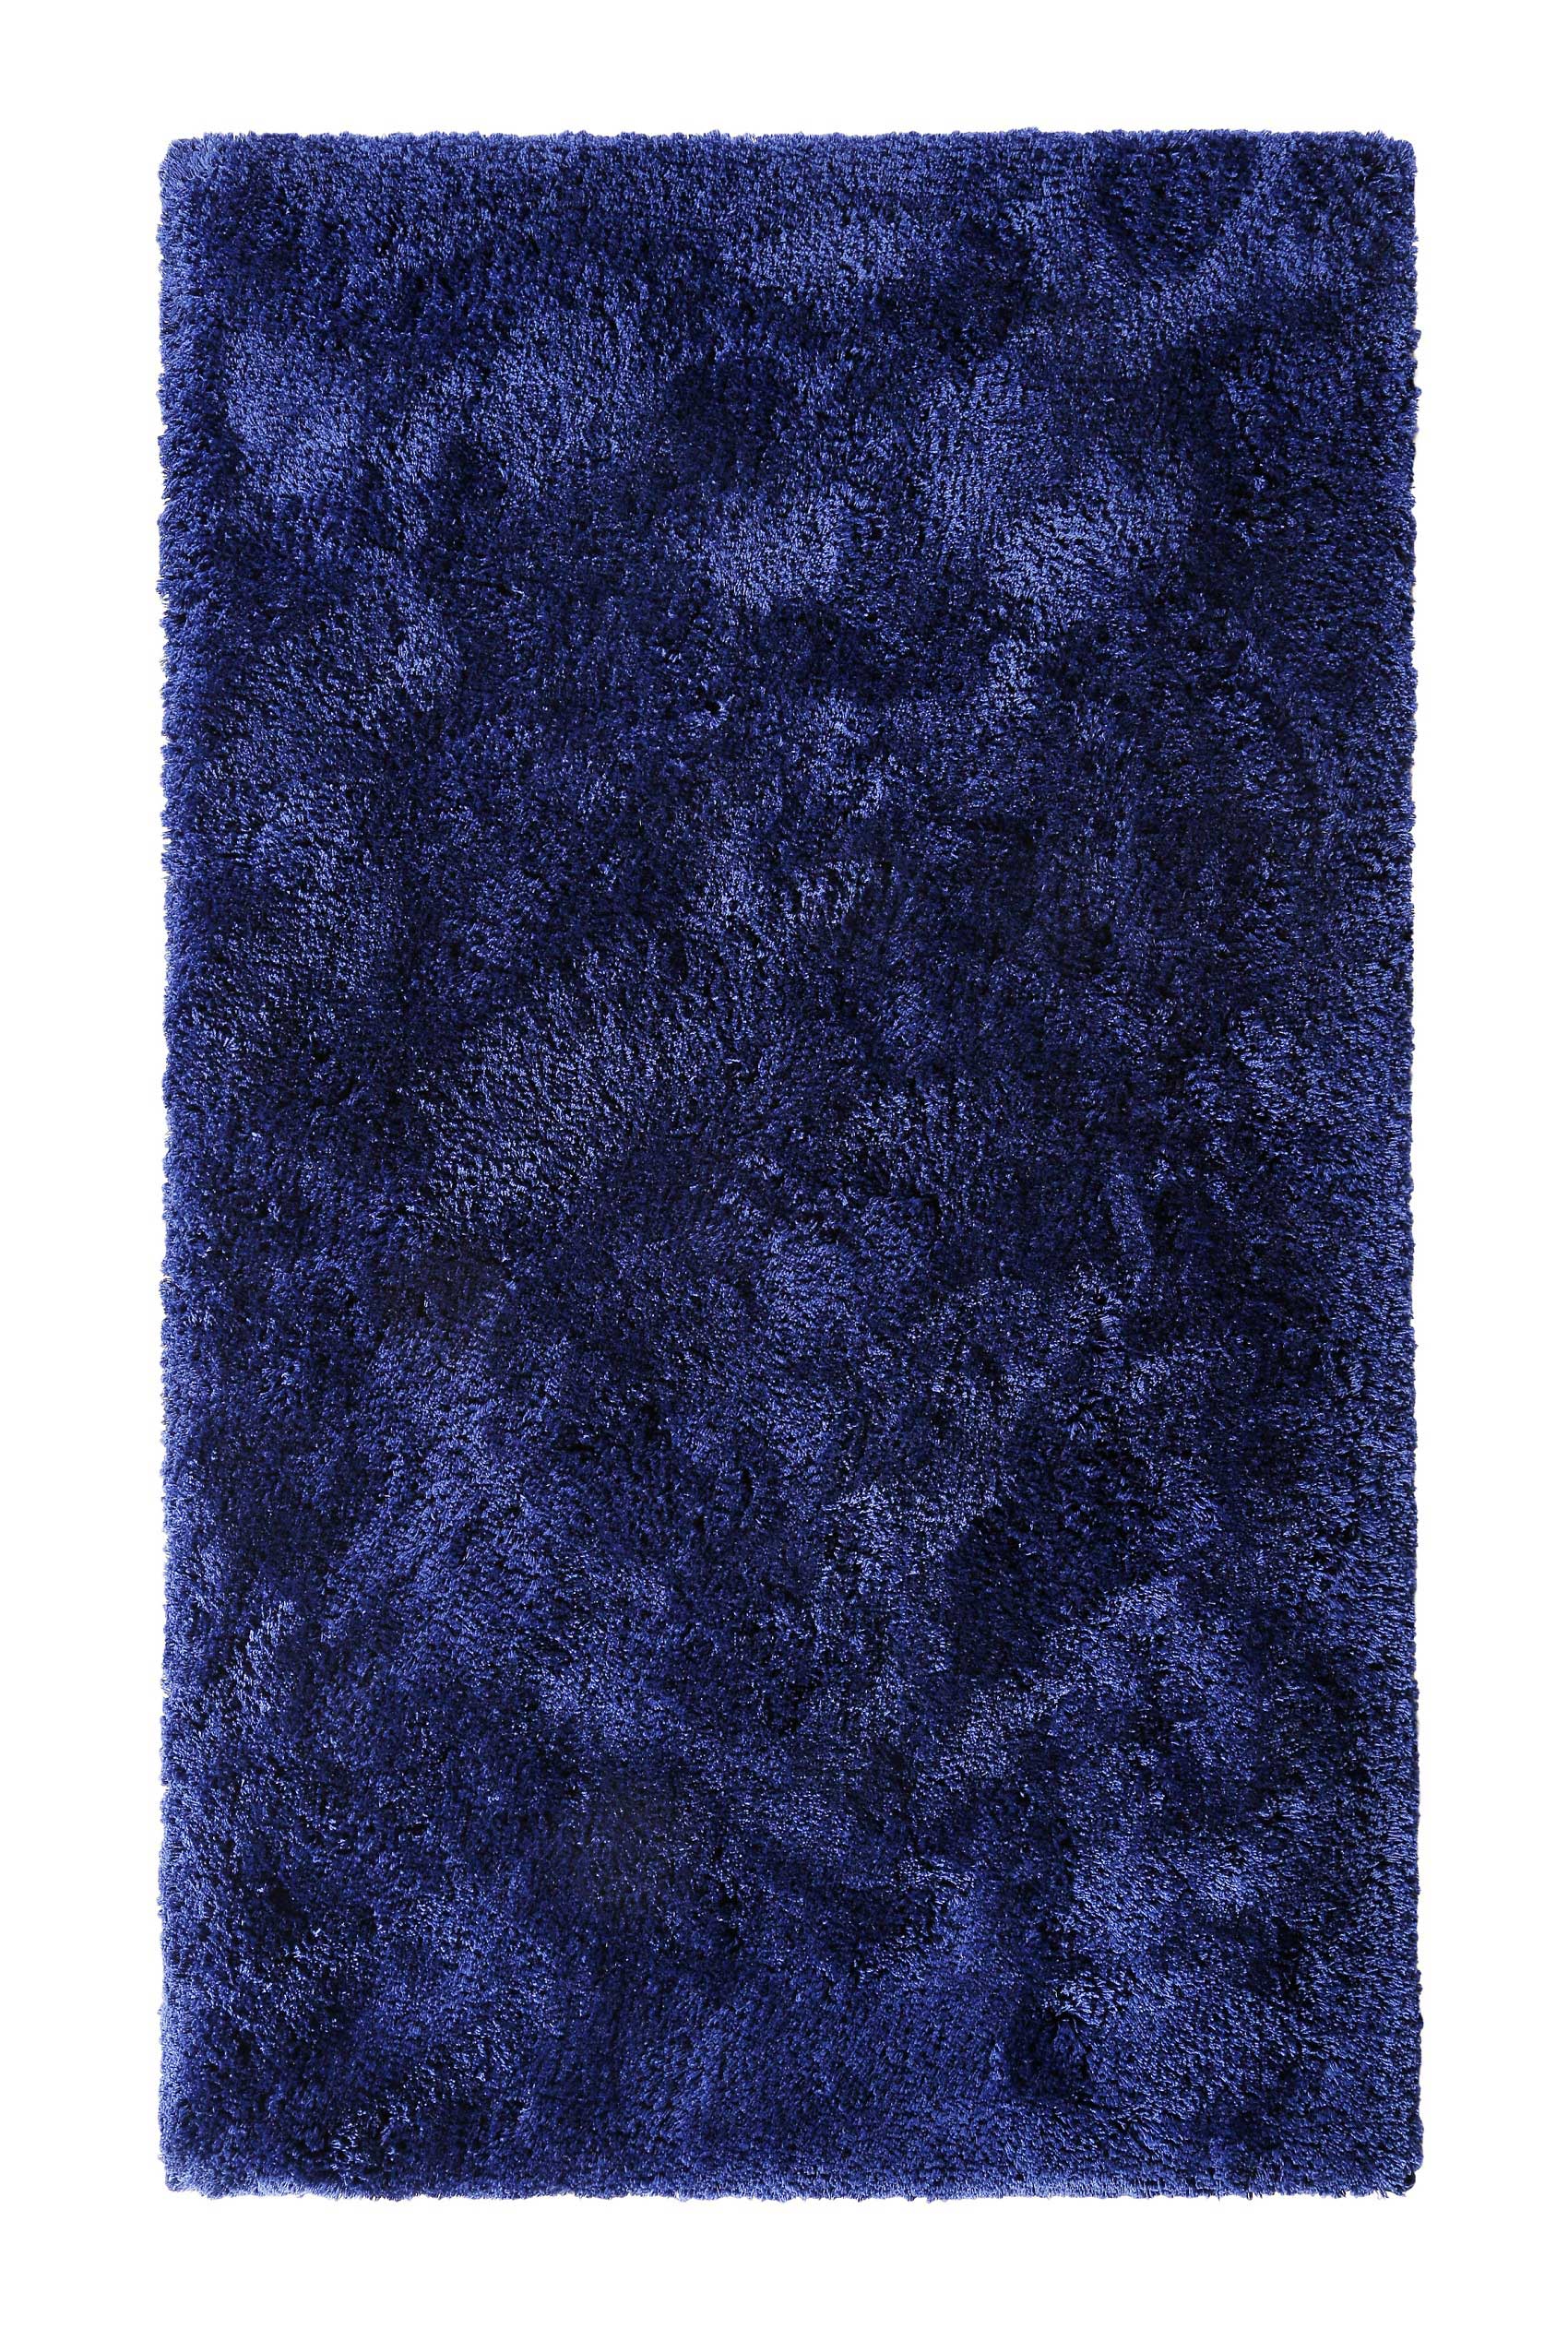 tapis de bain microfibre antidérapant bleu marine 70x120